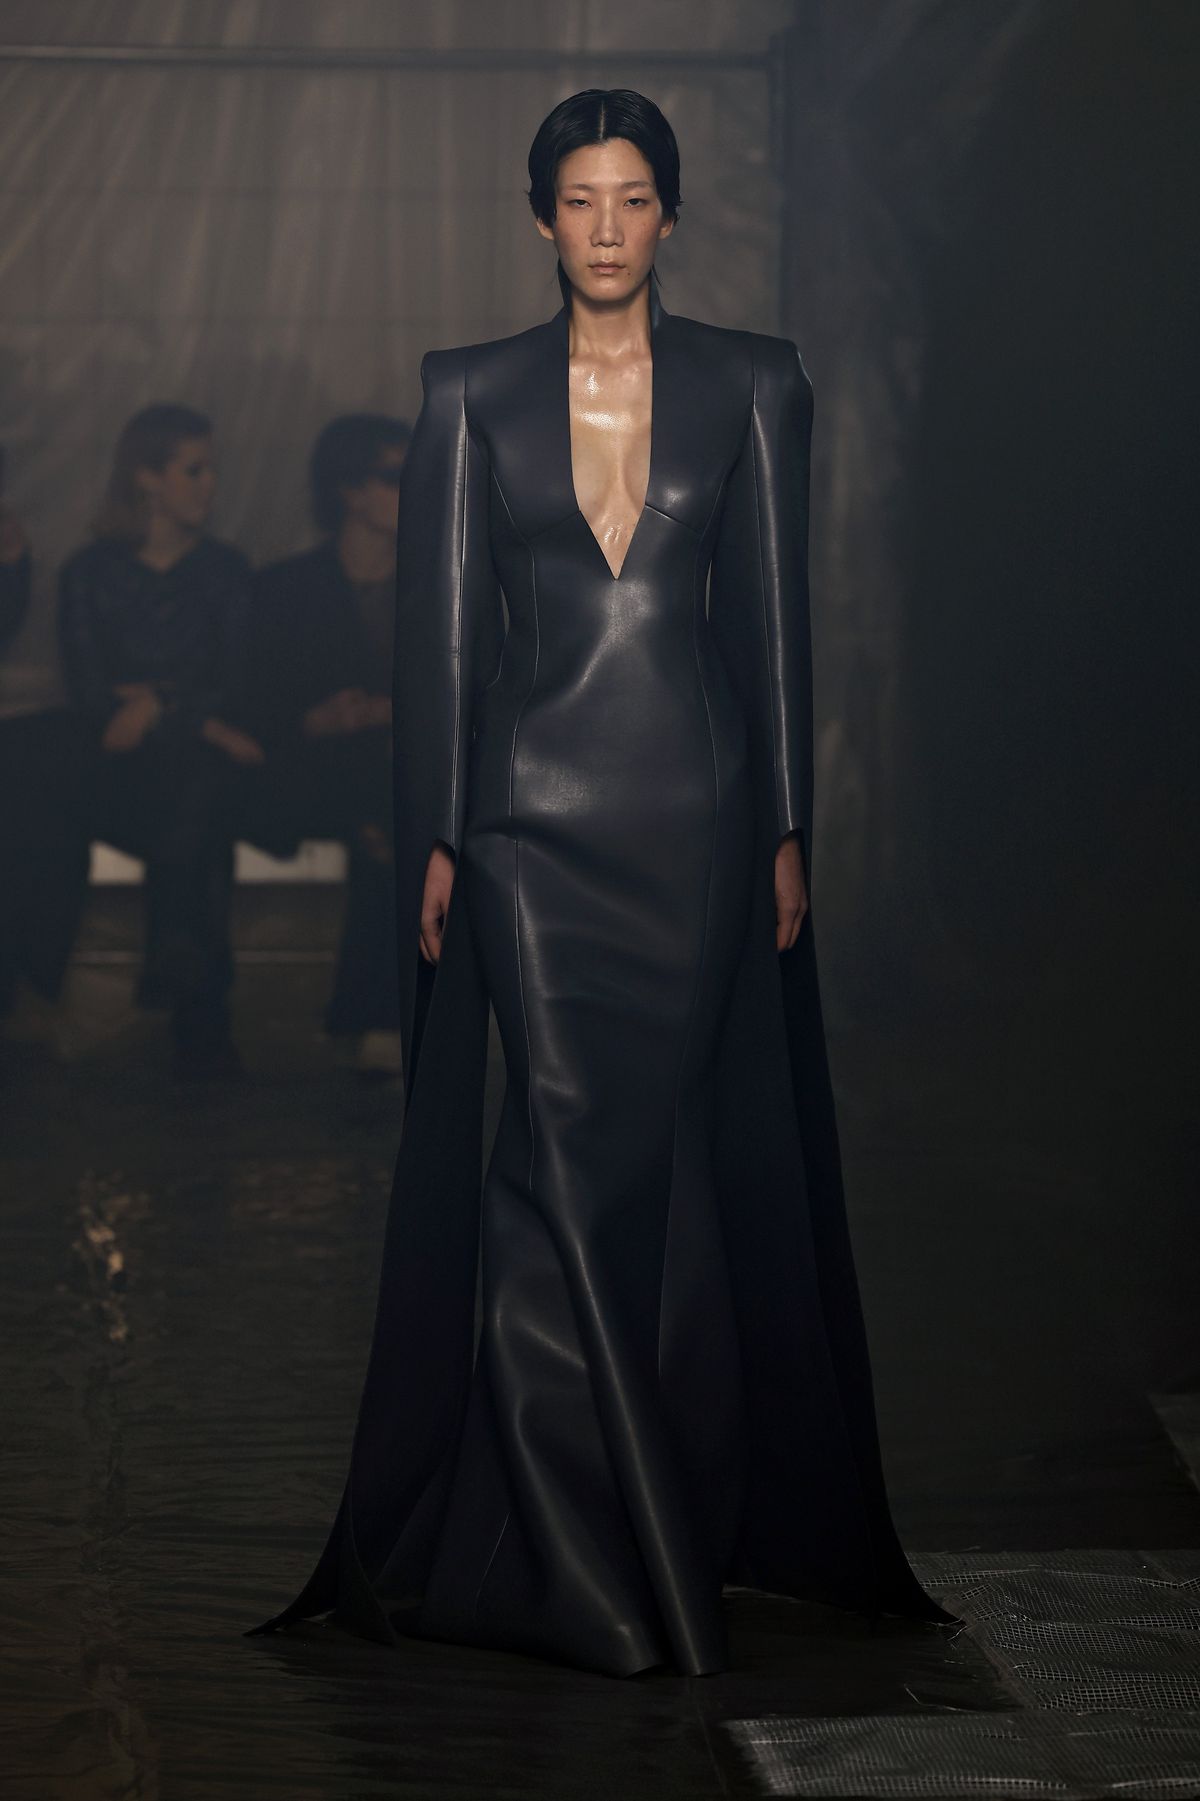 A model wearing a long black leather dress walks the runway at the Han Kjobenhavn fashion show at Milan Fashion Week.